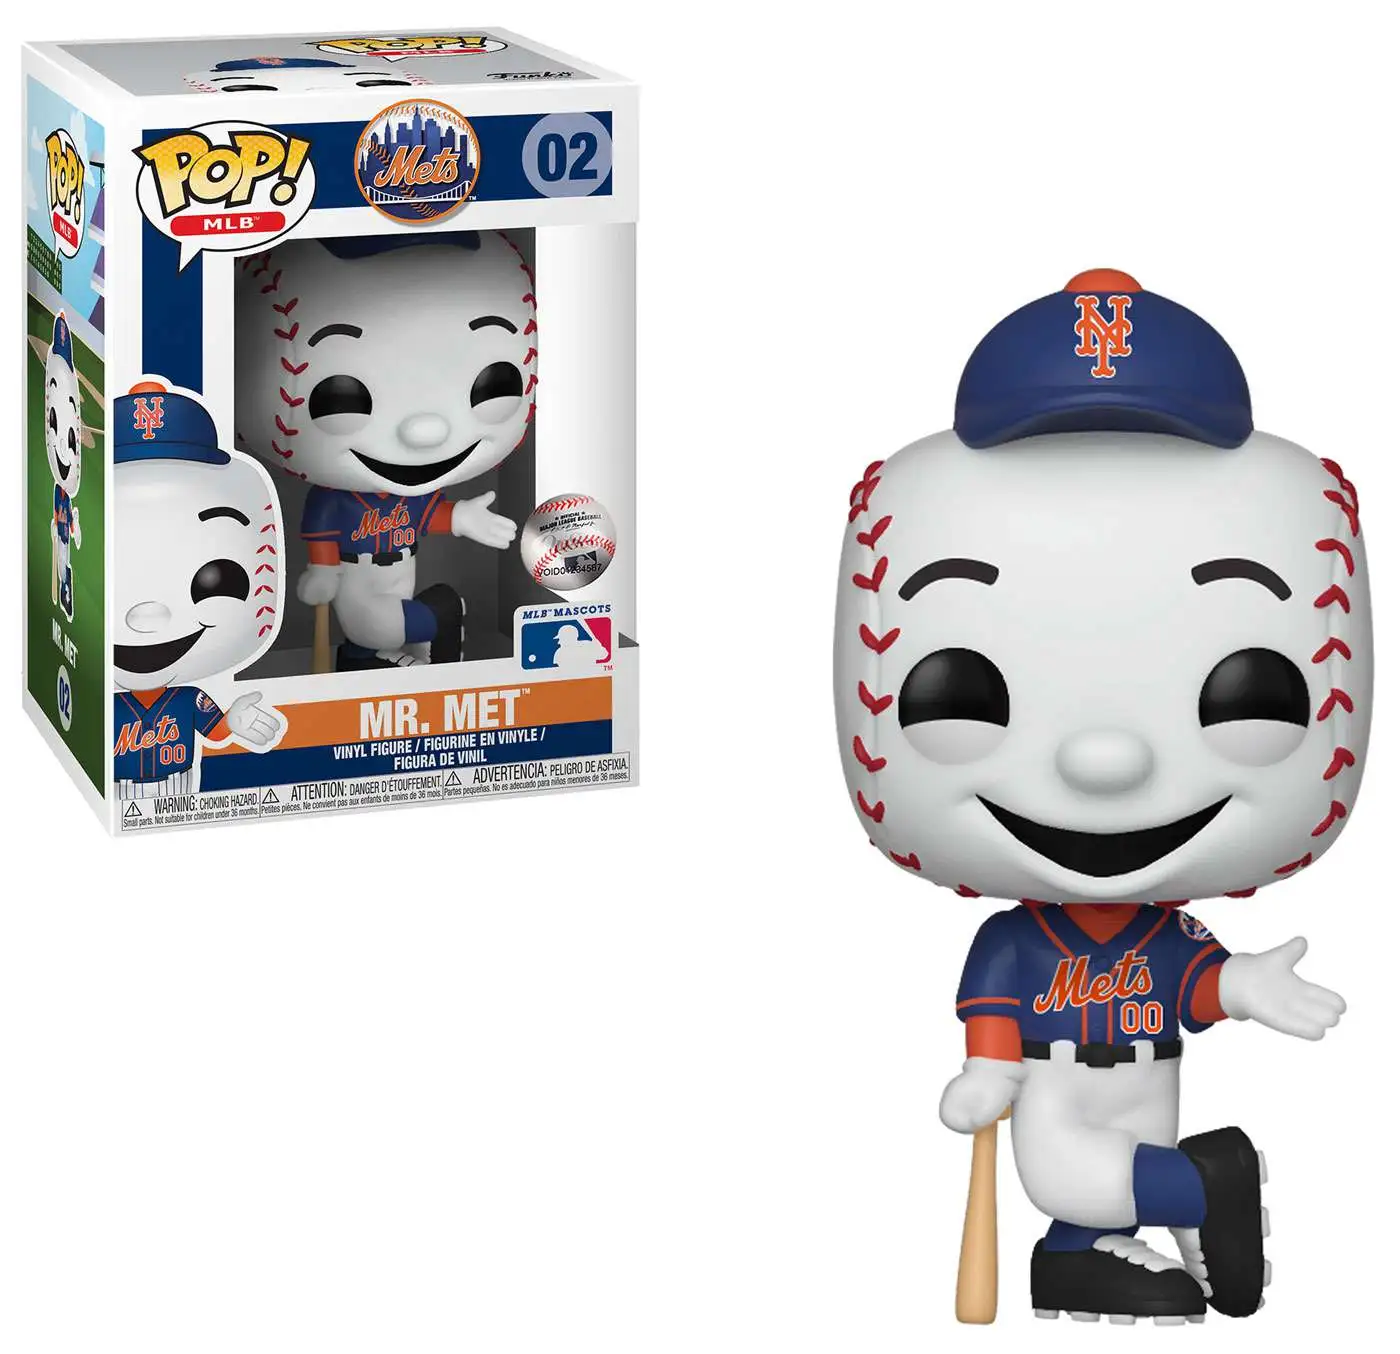 Toy Fair New York Reveals: MLB® Mascots & MLB Pop!